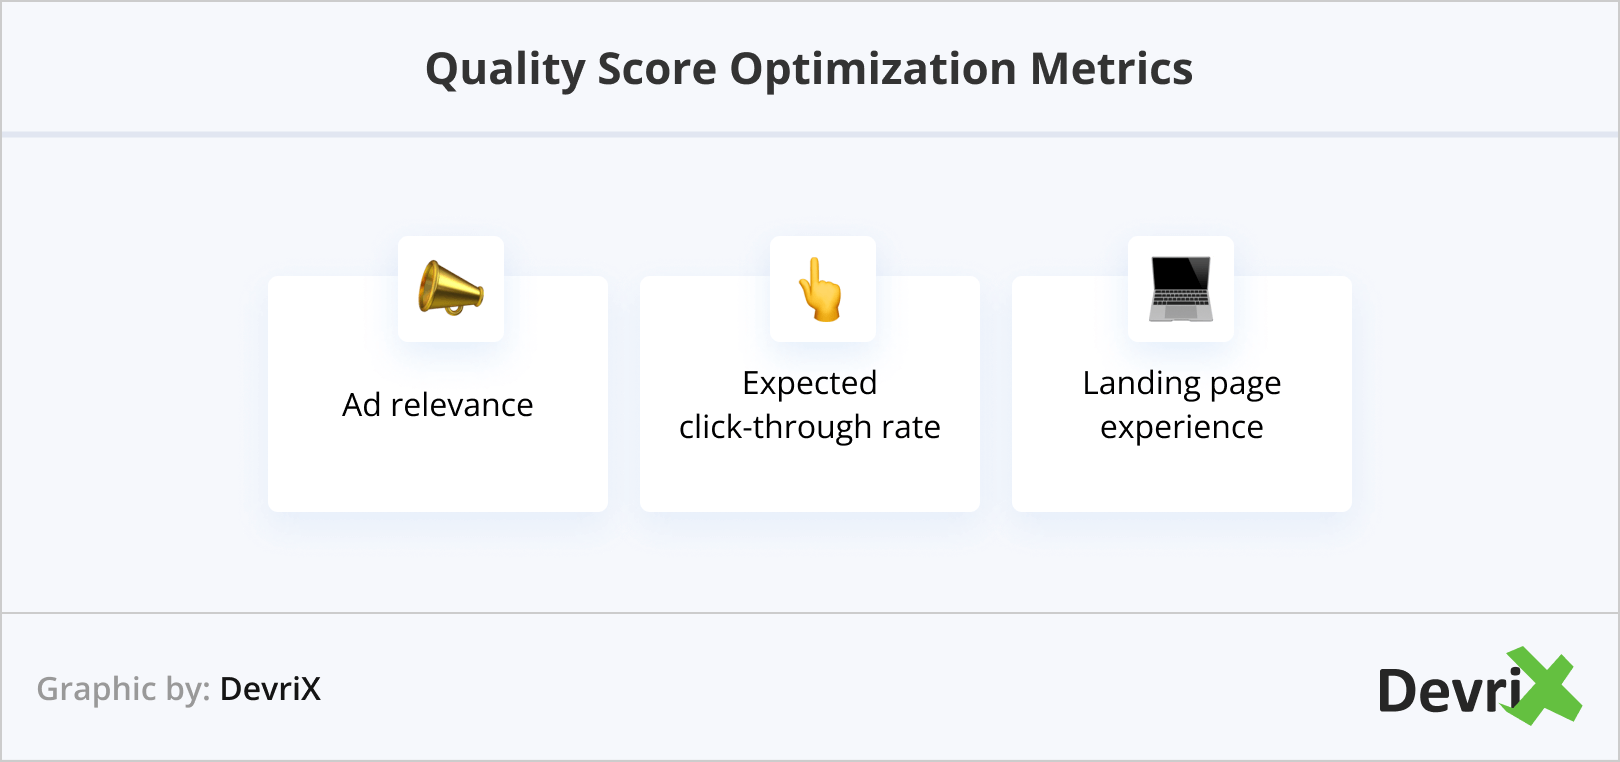 Quality Score Optimization Metrics